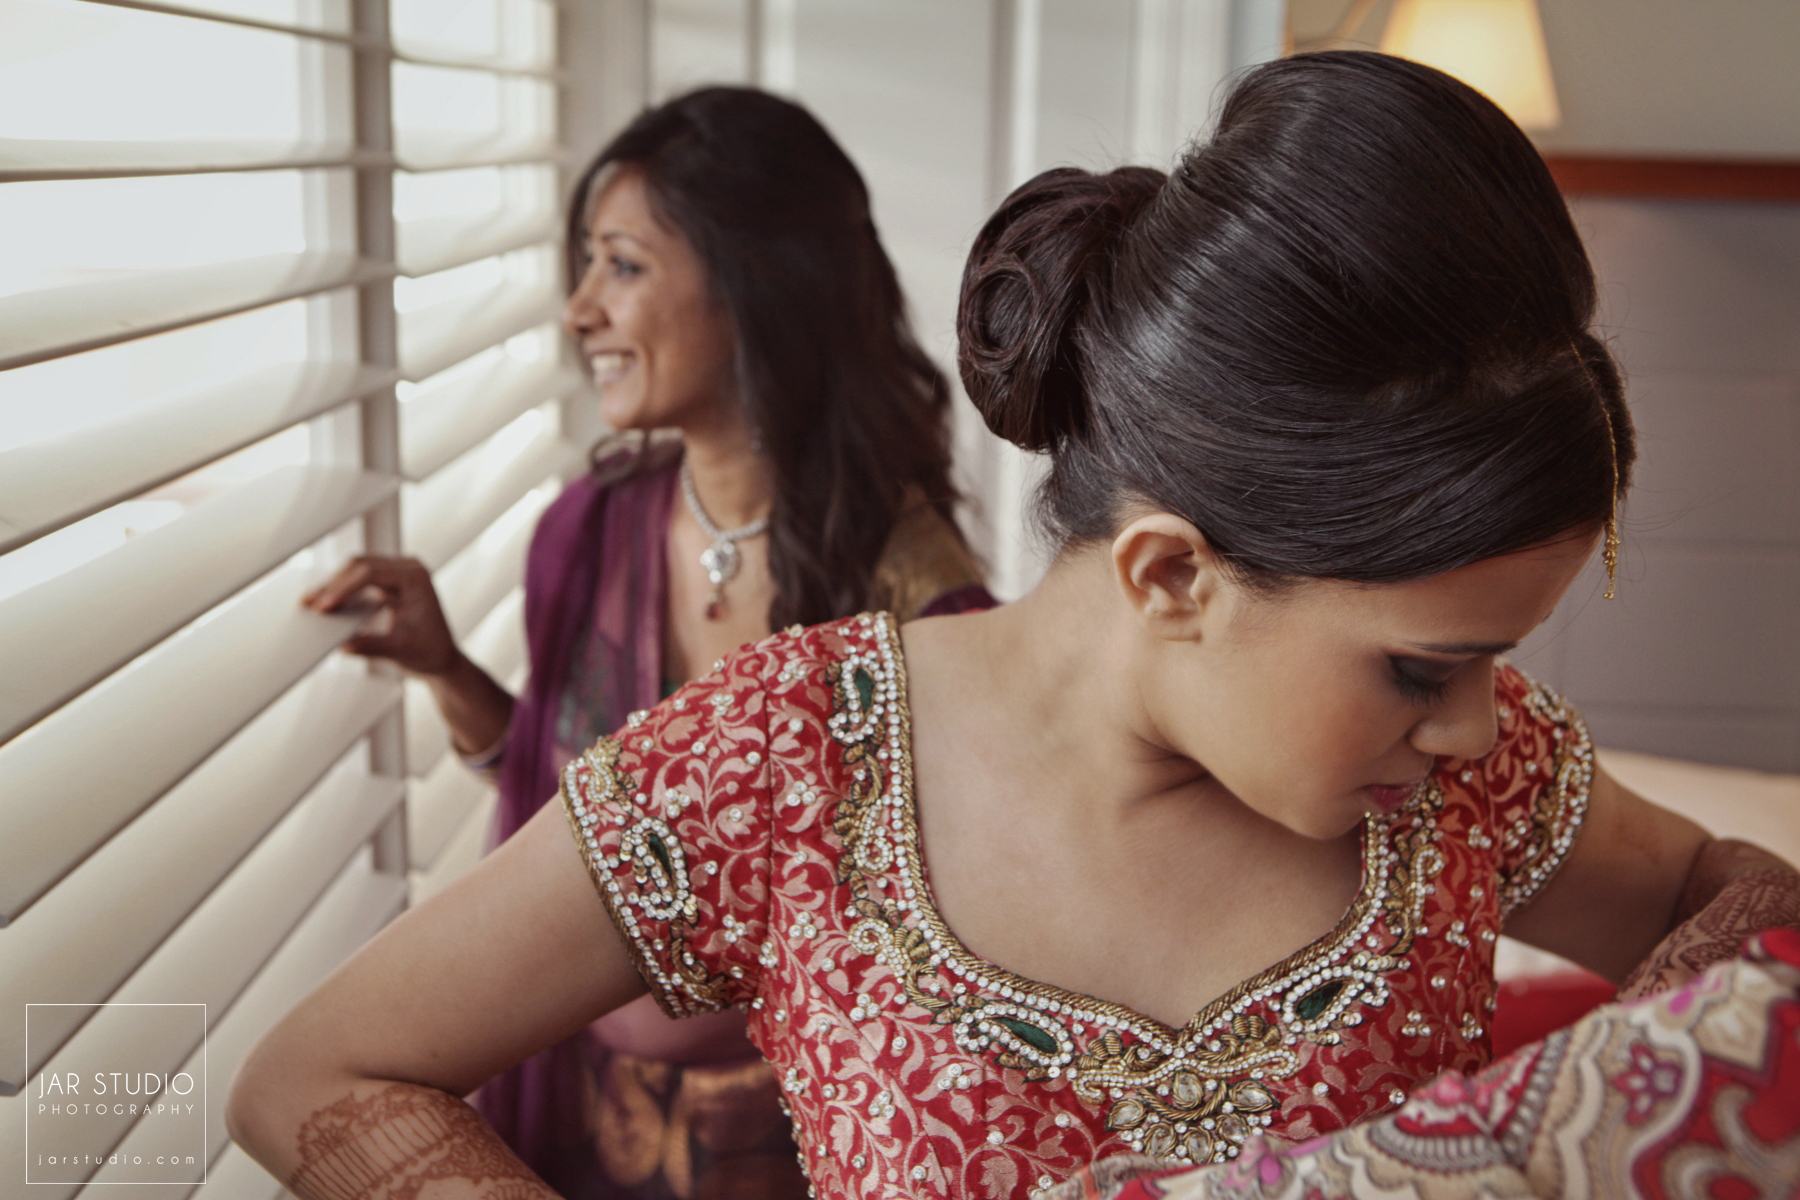 11-hindu-bride-getting-ready-jarstudio-photography.JPG